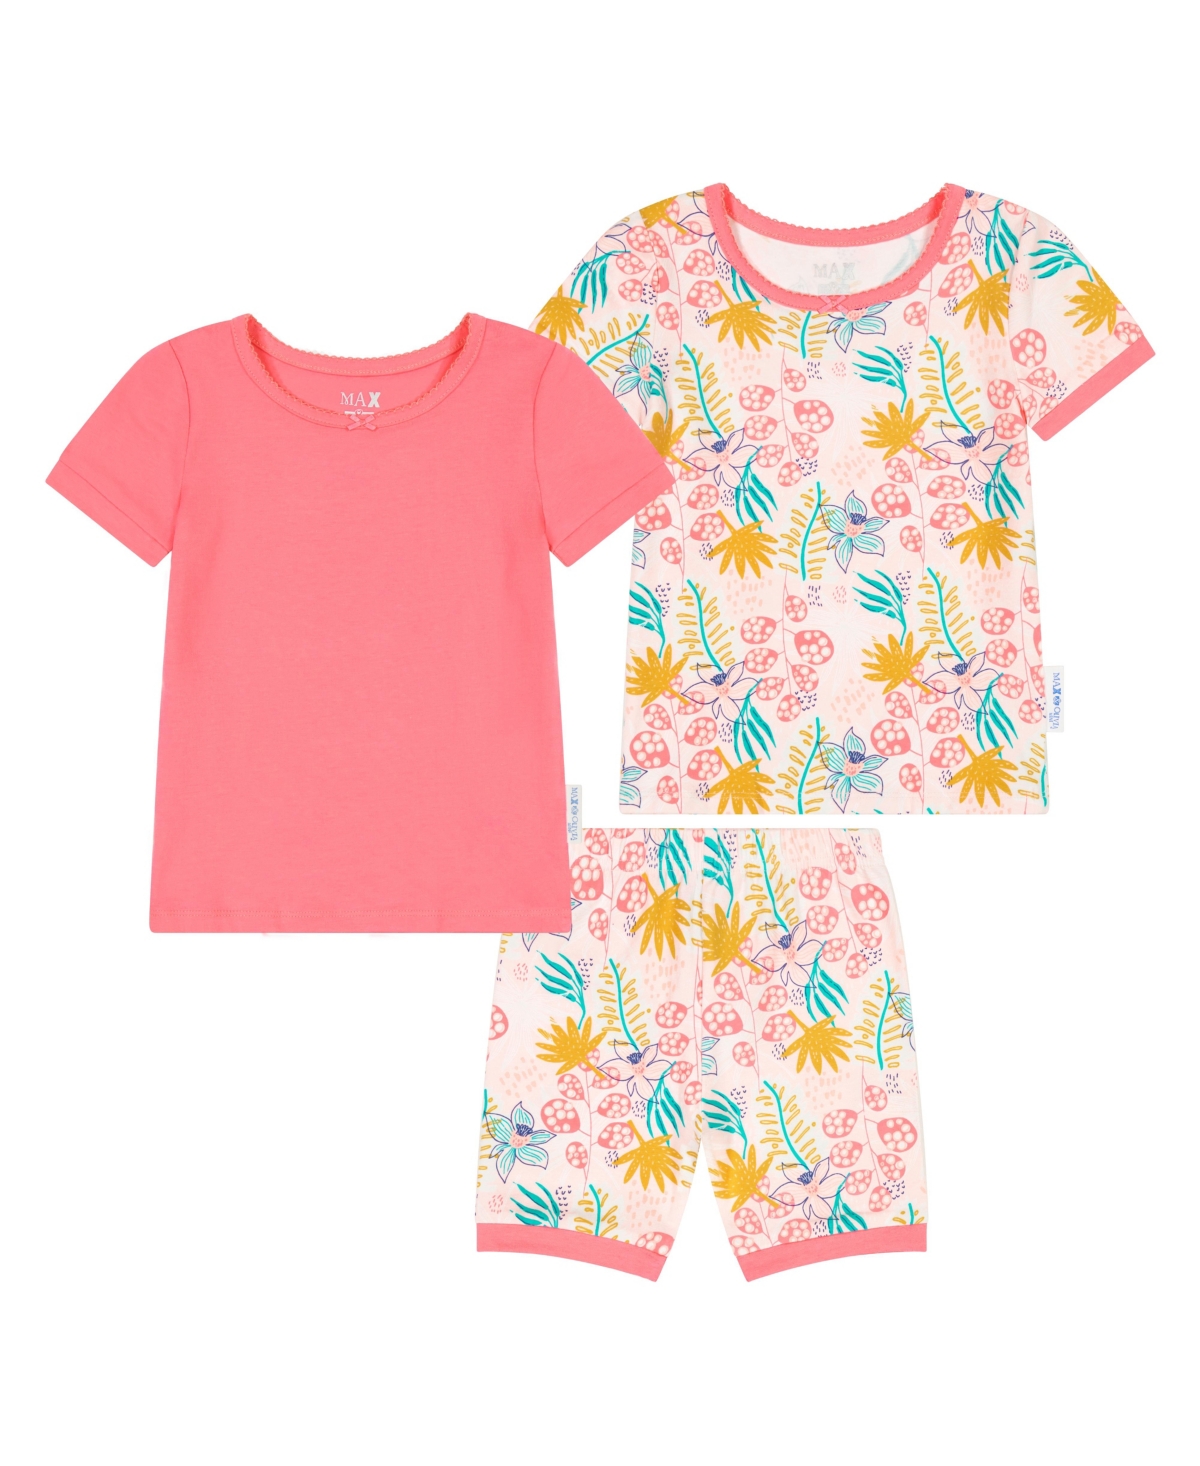 Max & Olivia Toddler Girls Pink Floral Snug Fit Pajama, 3 Piece Set